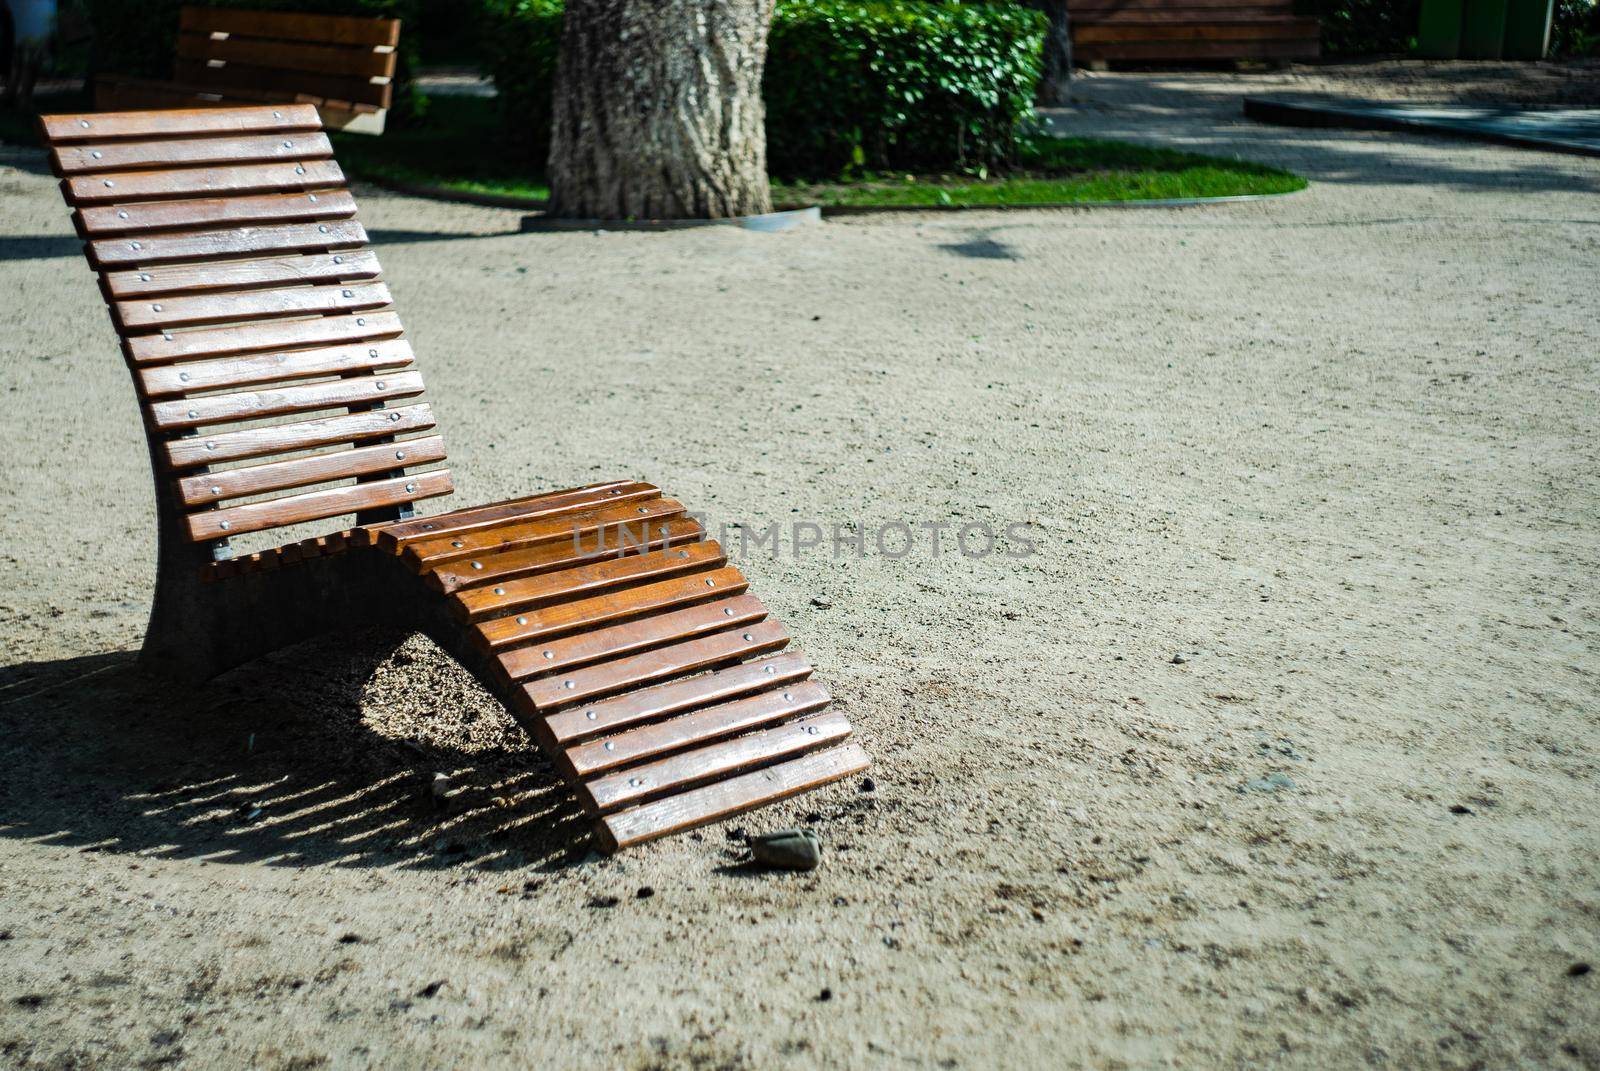 Wooden garden chair outdoor in the summer park